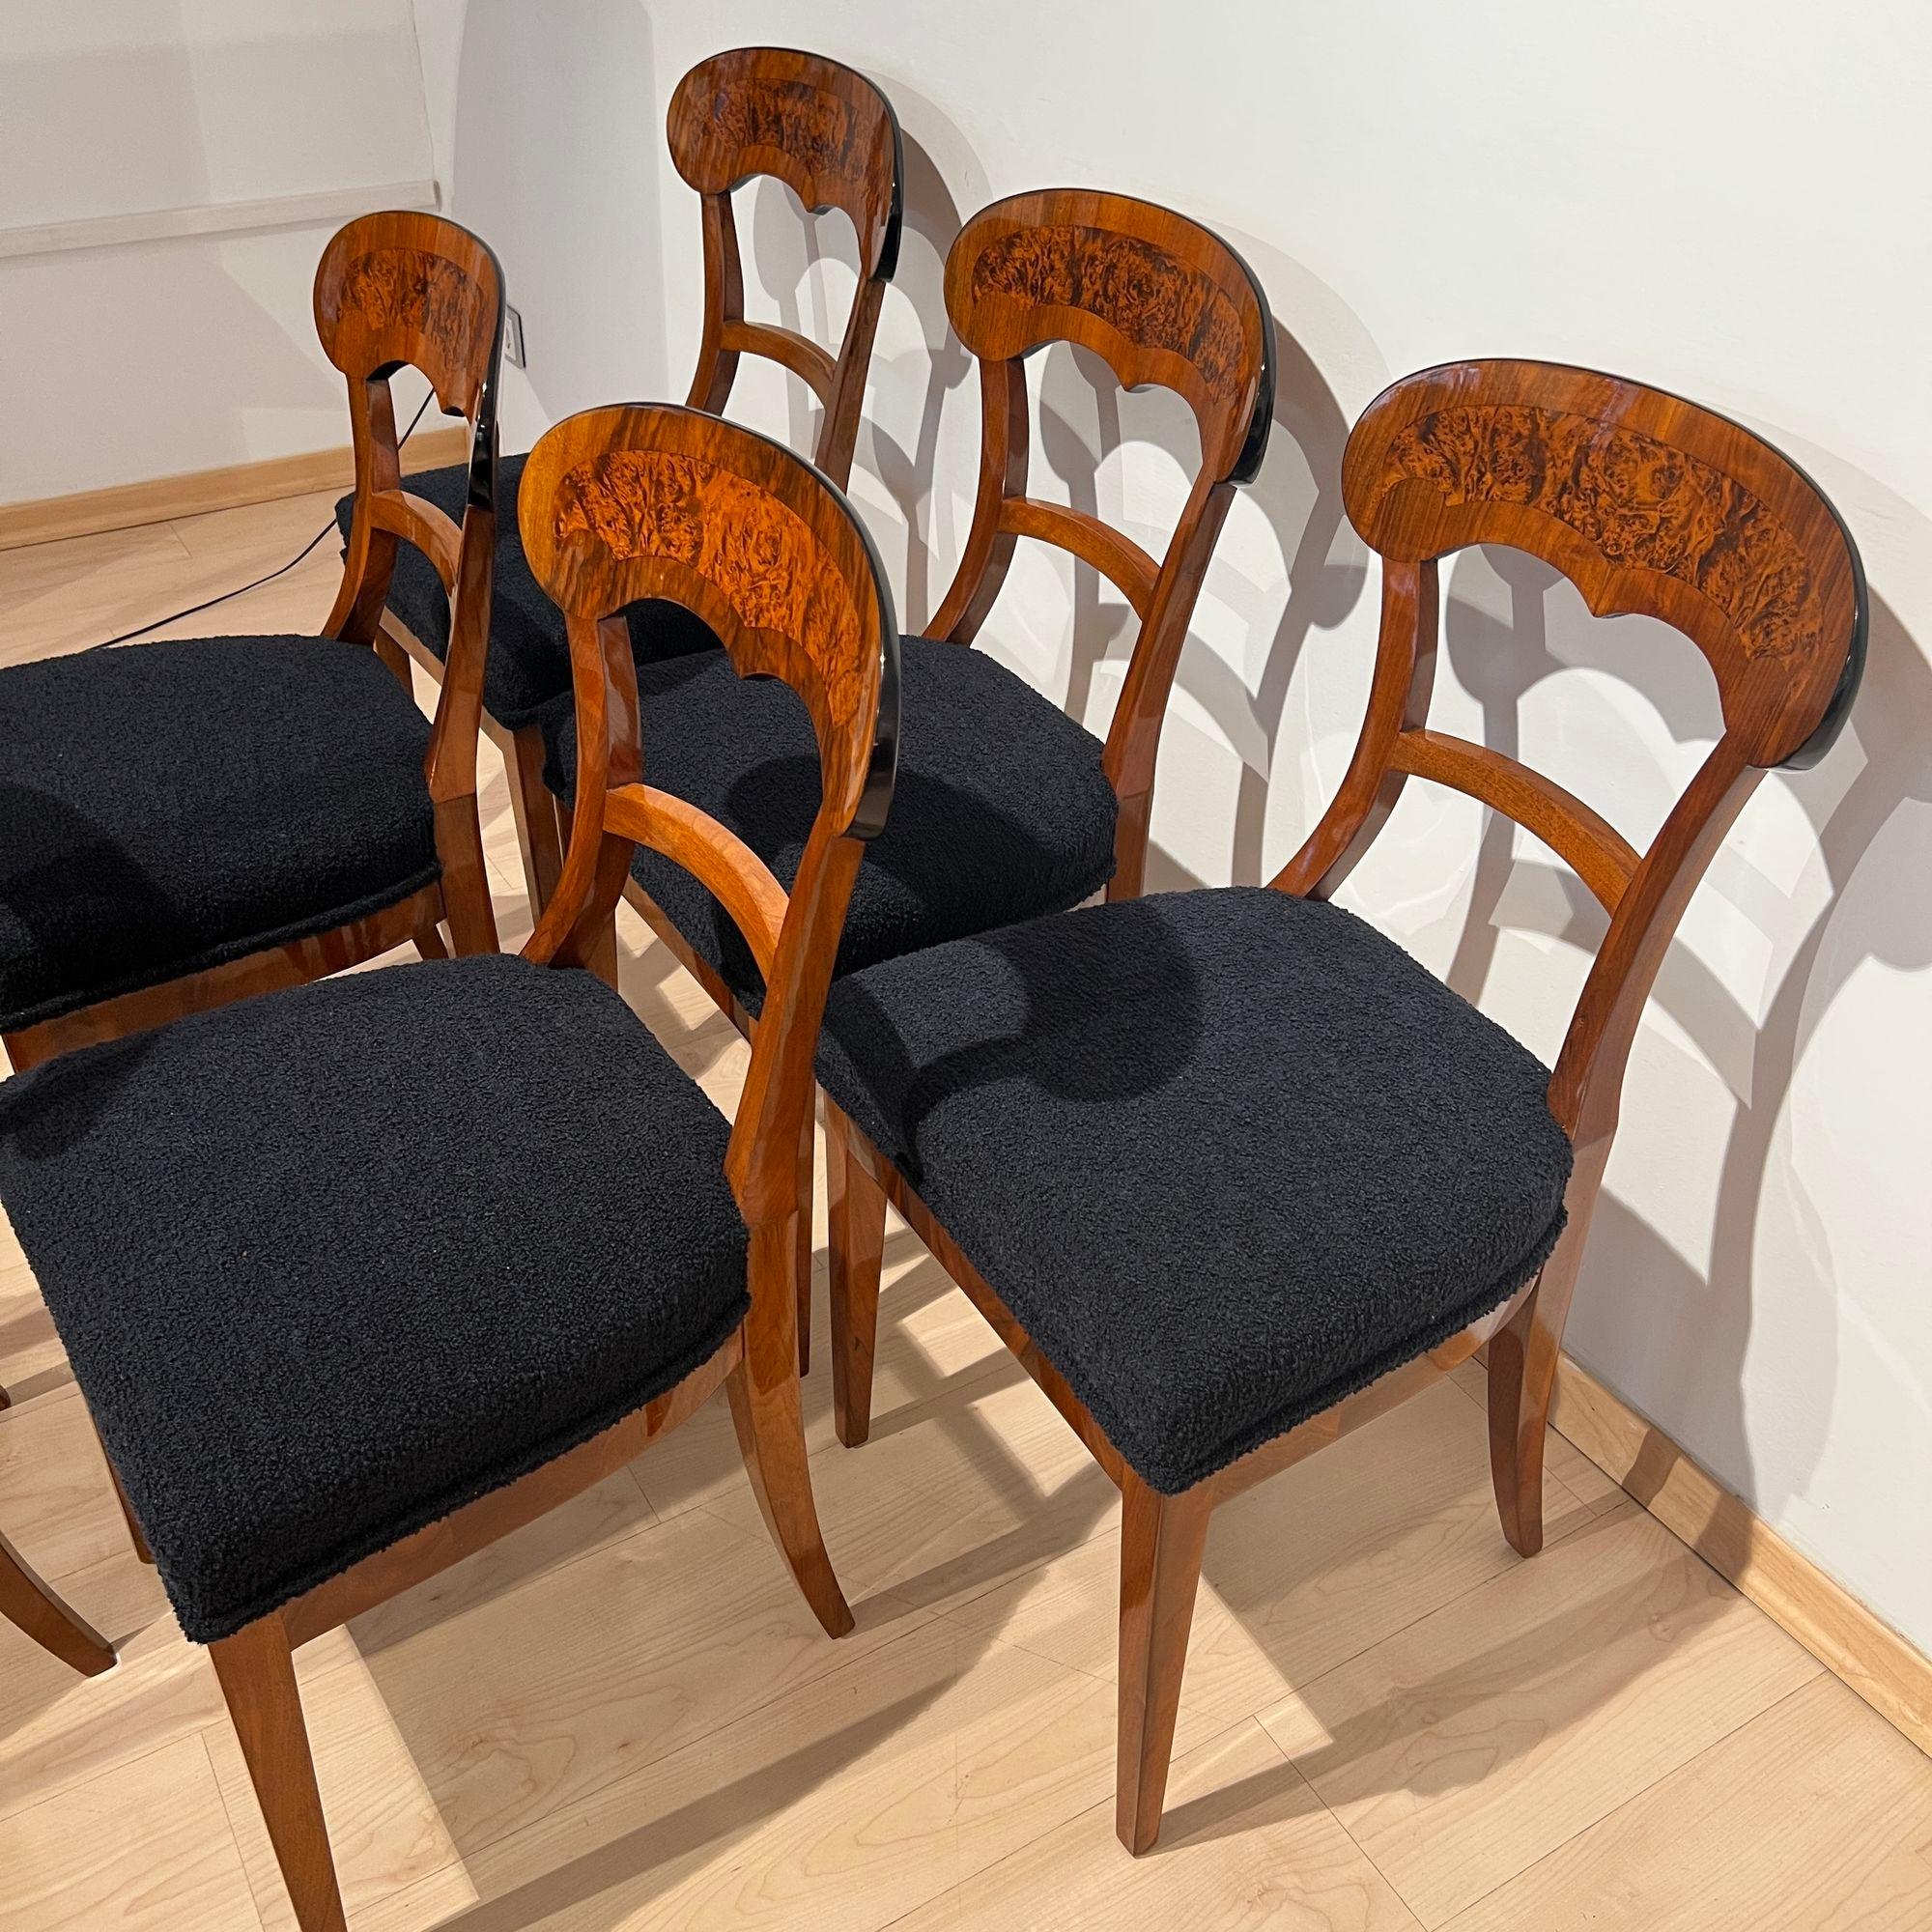 Set of Six Biedermeier Shovel Chairs, Walnut, Roots Veneer, South Germany, 1840s For Sale 2